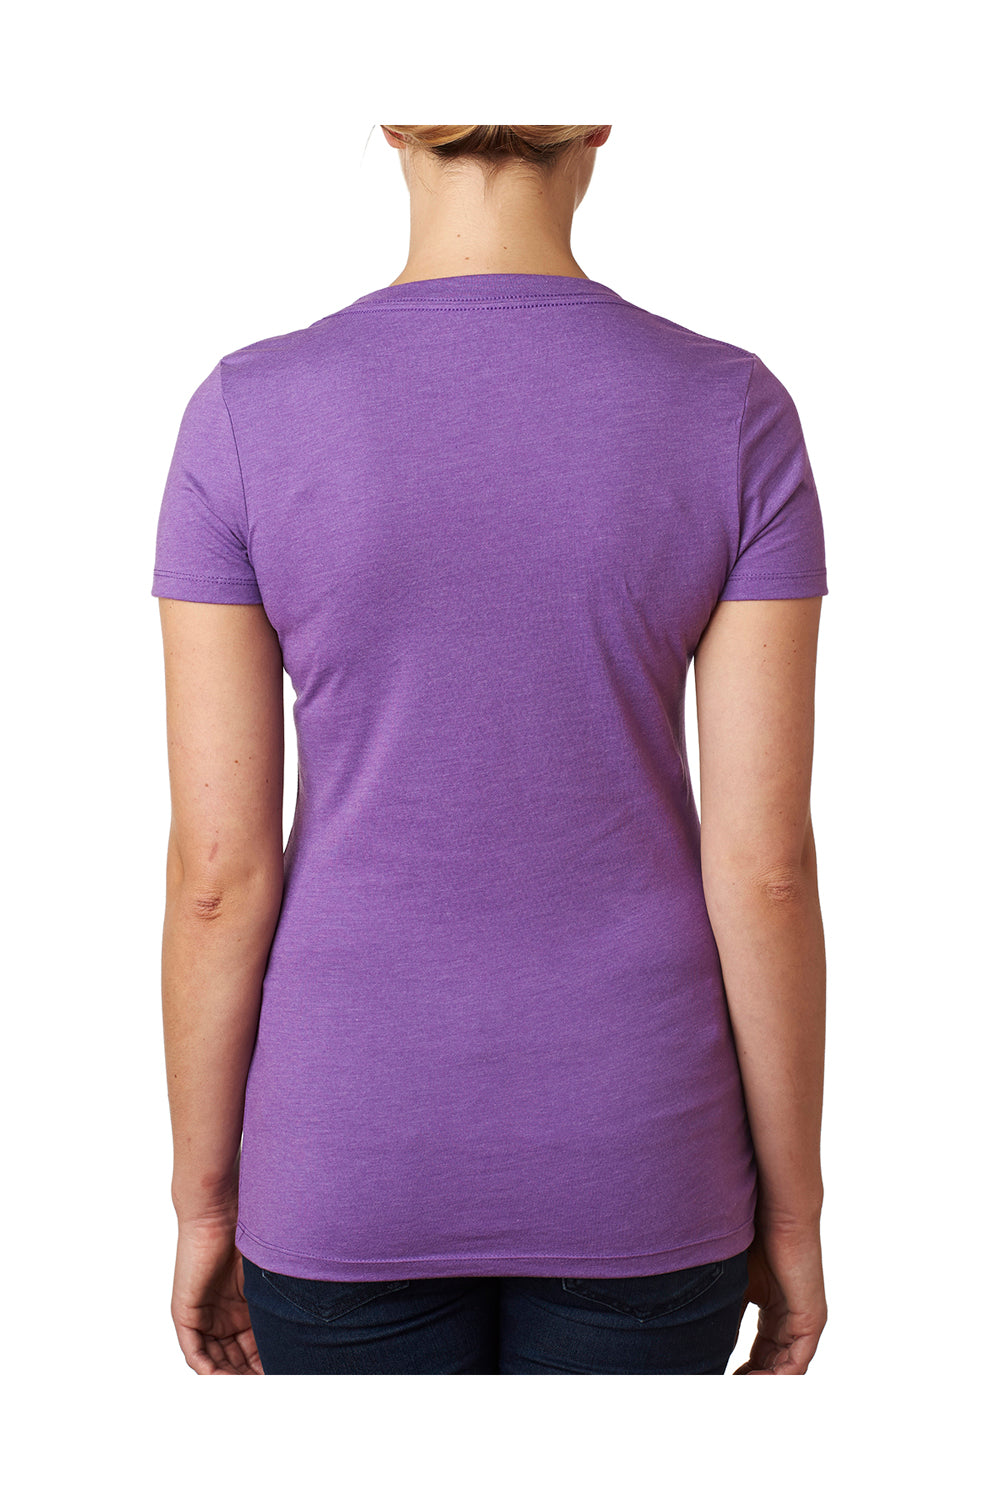 Next Level 6640 Womens CVC Jersey Short Sleeve V-Neck T-Shirt Purple Berry Back